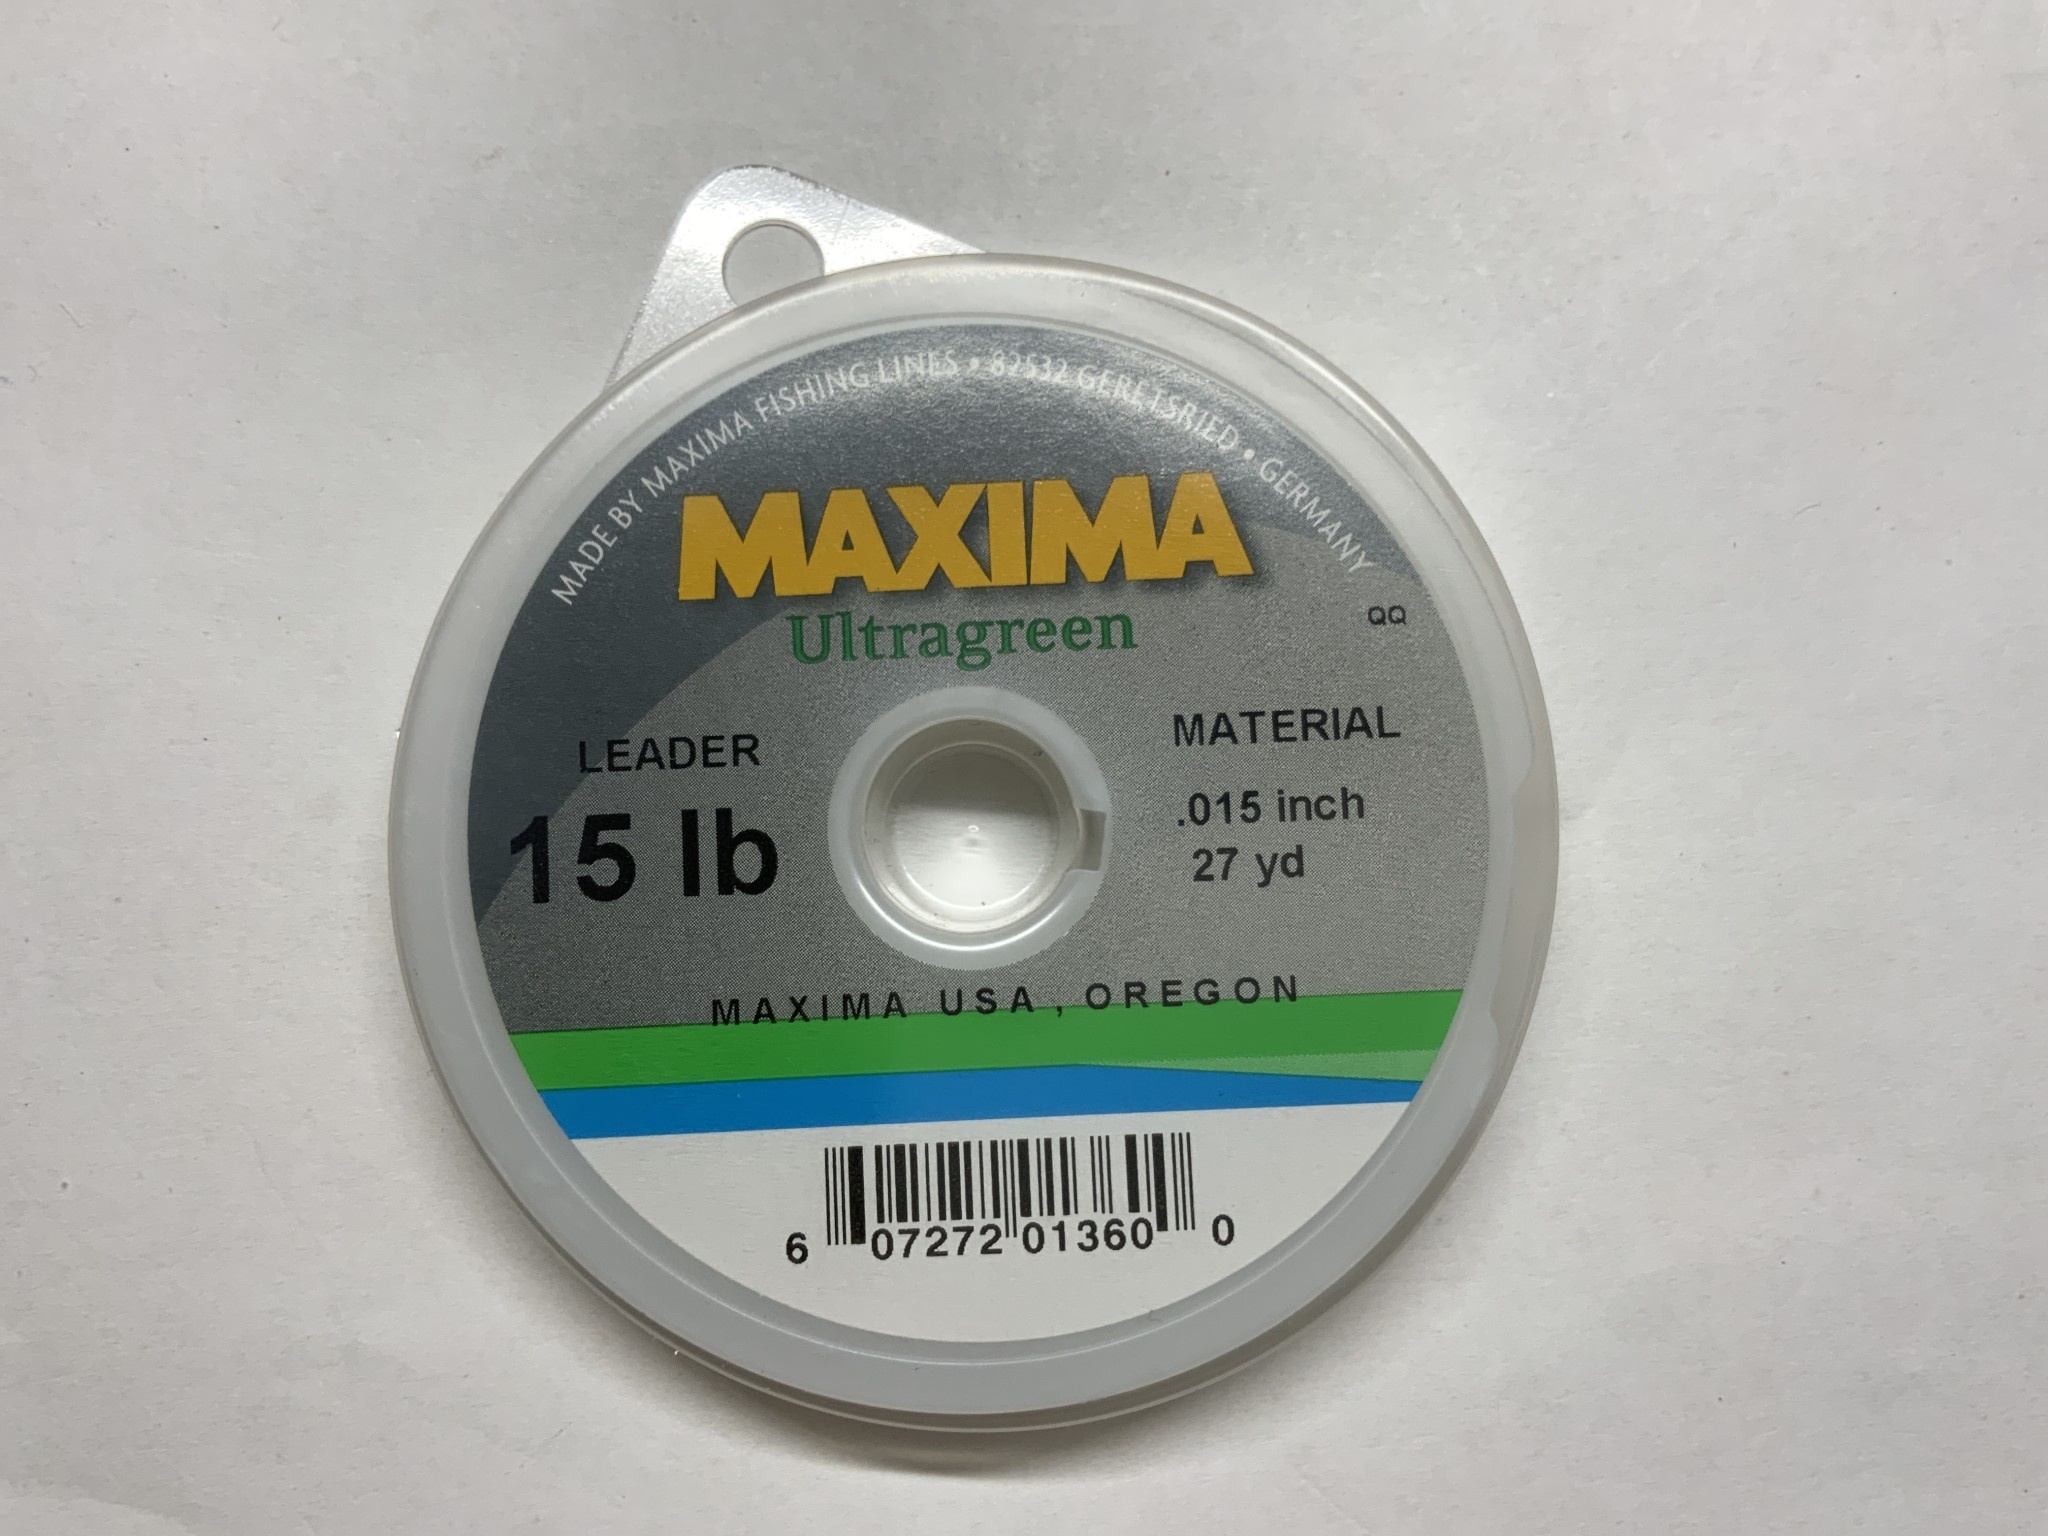 Maxima Ultragreen Leader Material 27 YD - All Seasons Sports